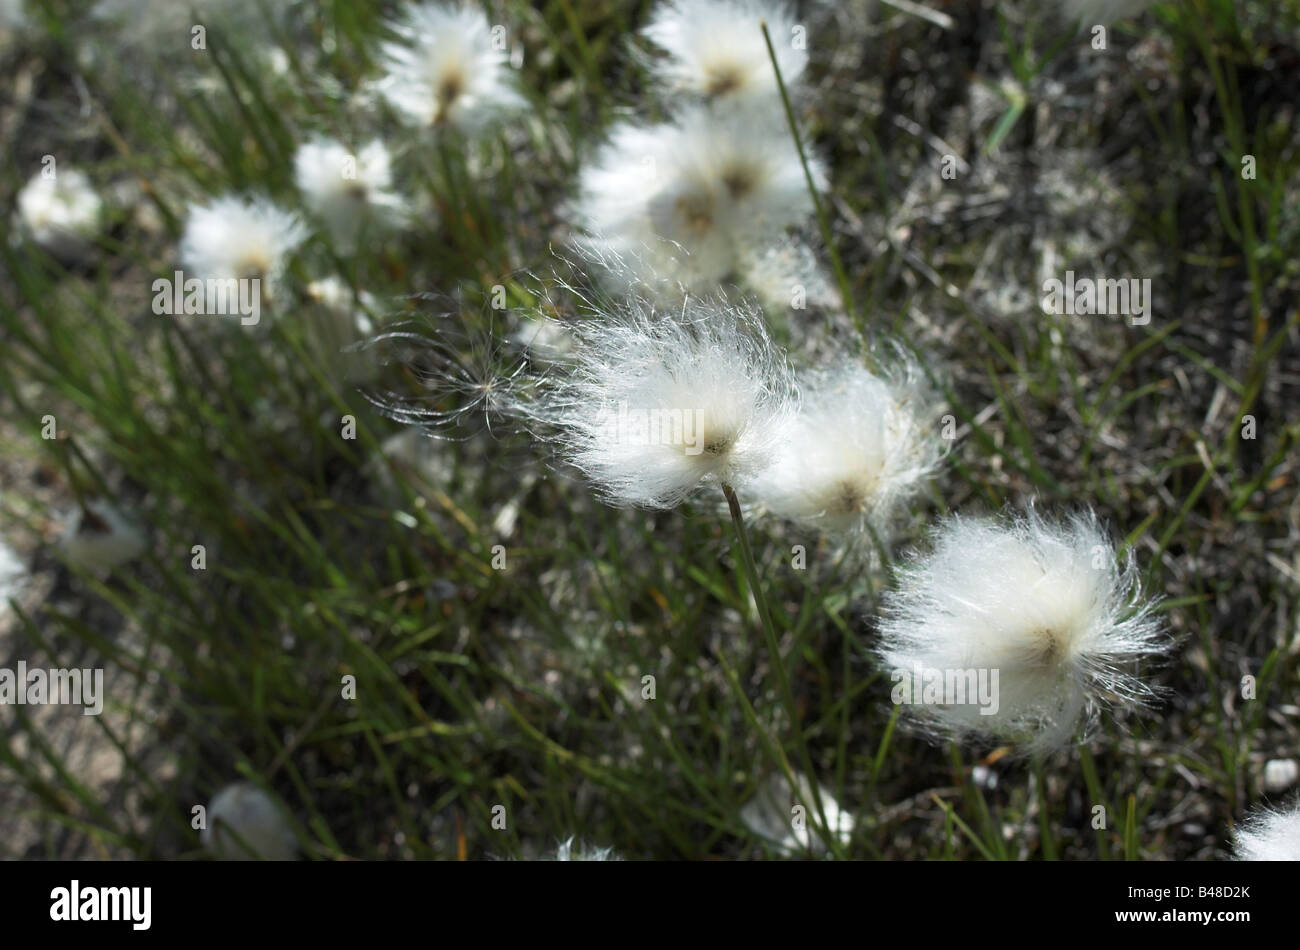 Cotton grass closeup Stock Photo